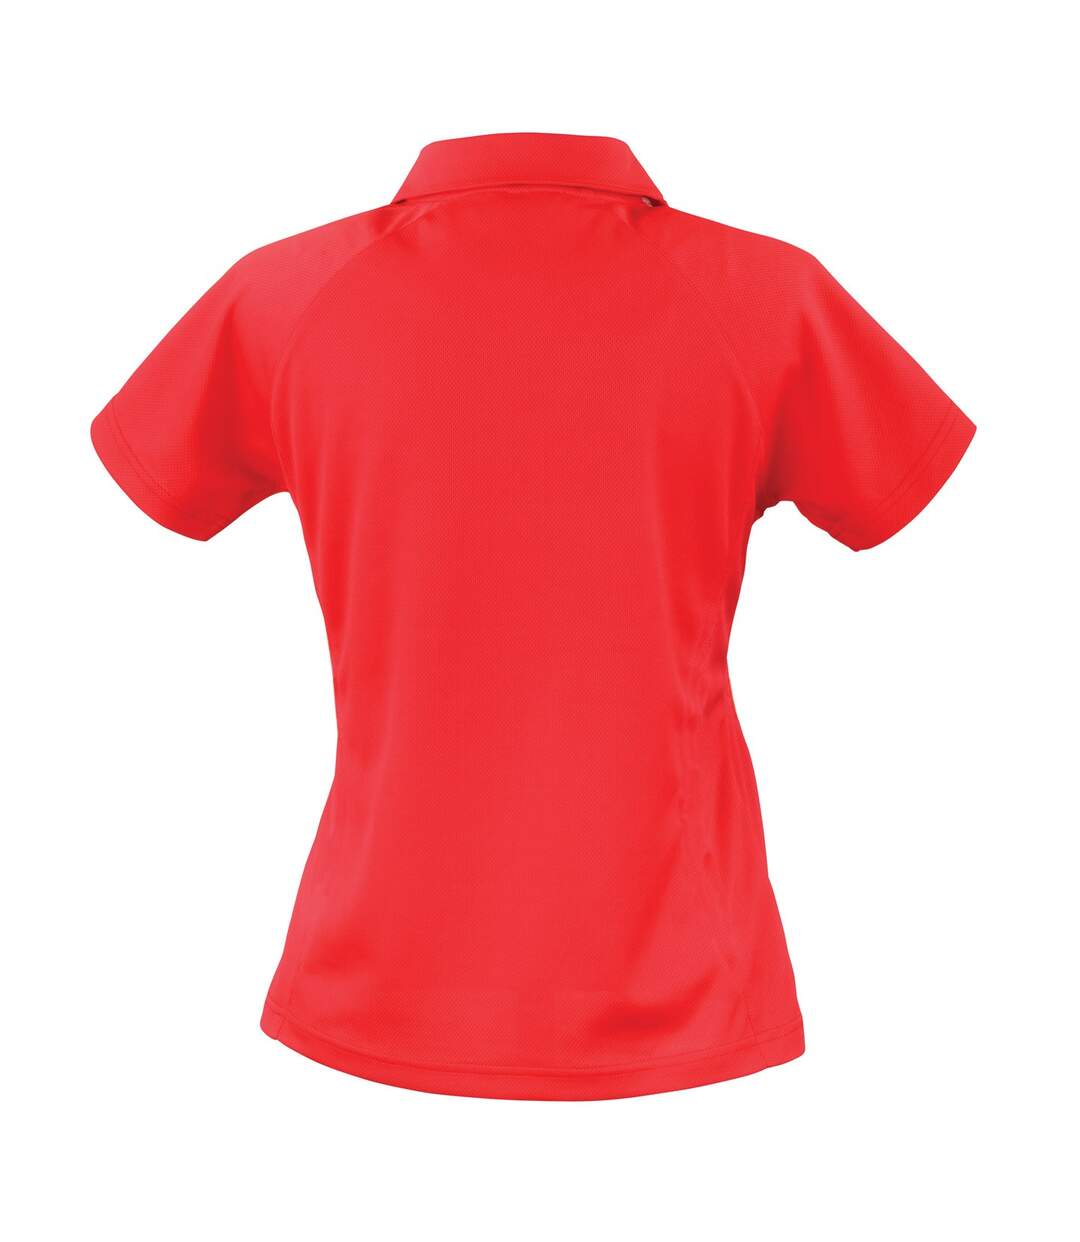 Spiro Mens Sports Team Spirit Performance Polo Shirt (Red/White)